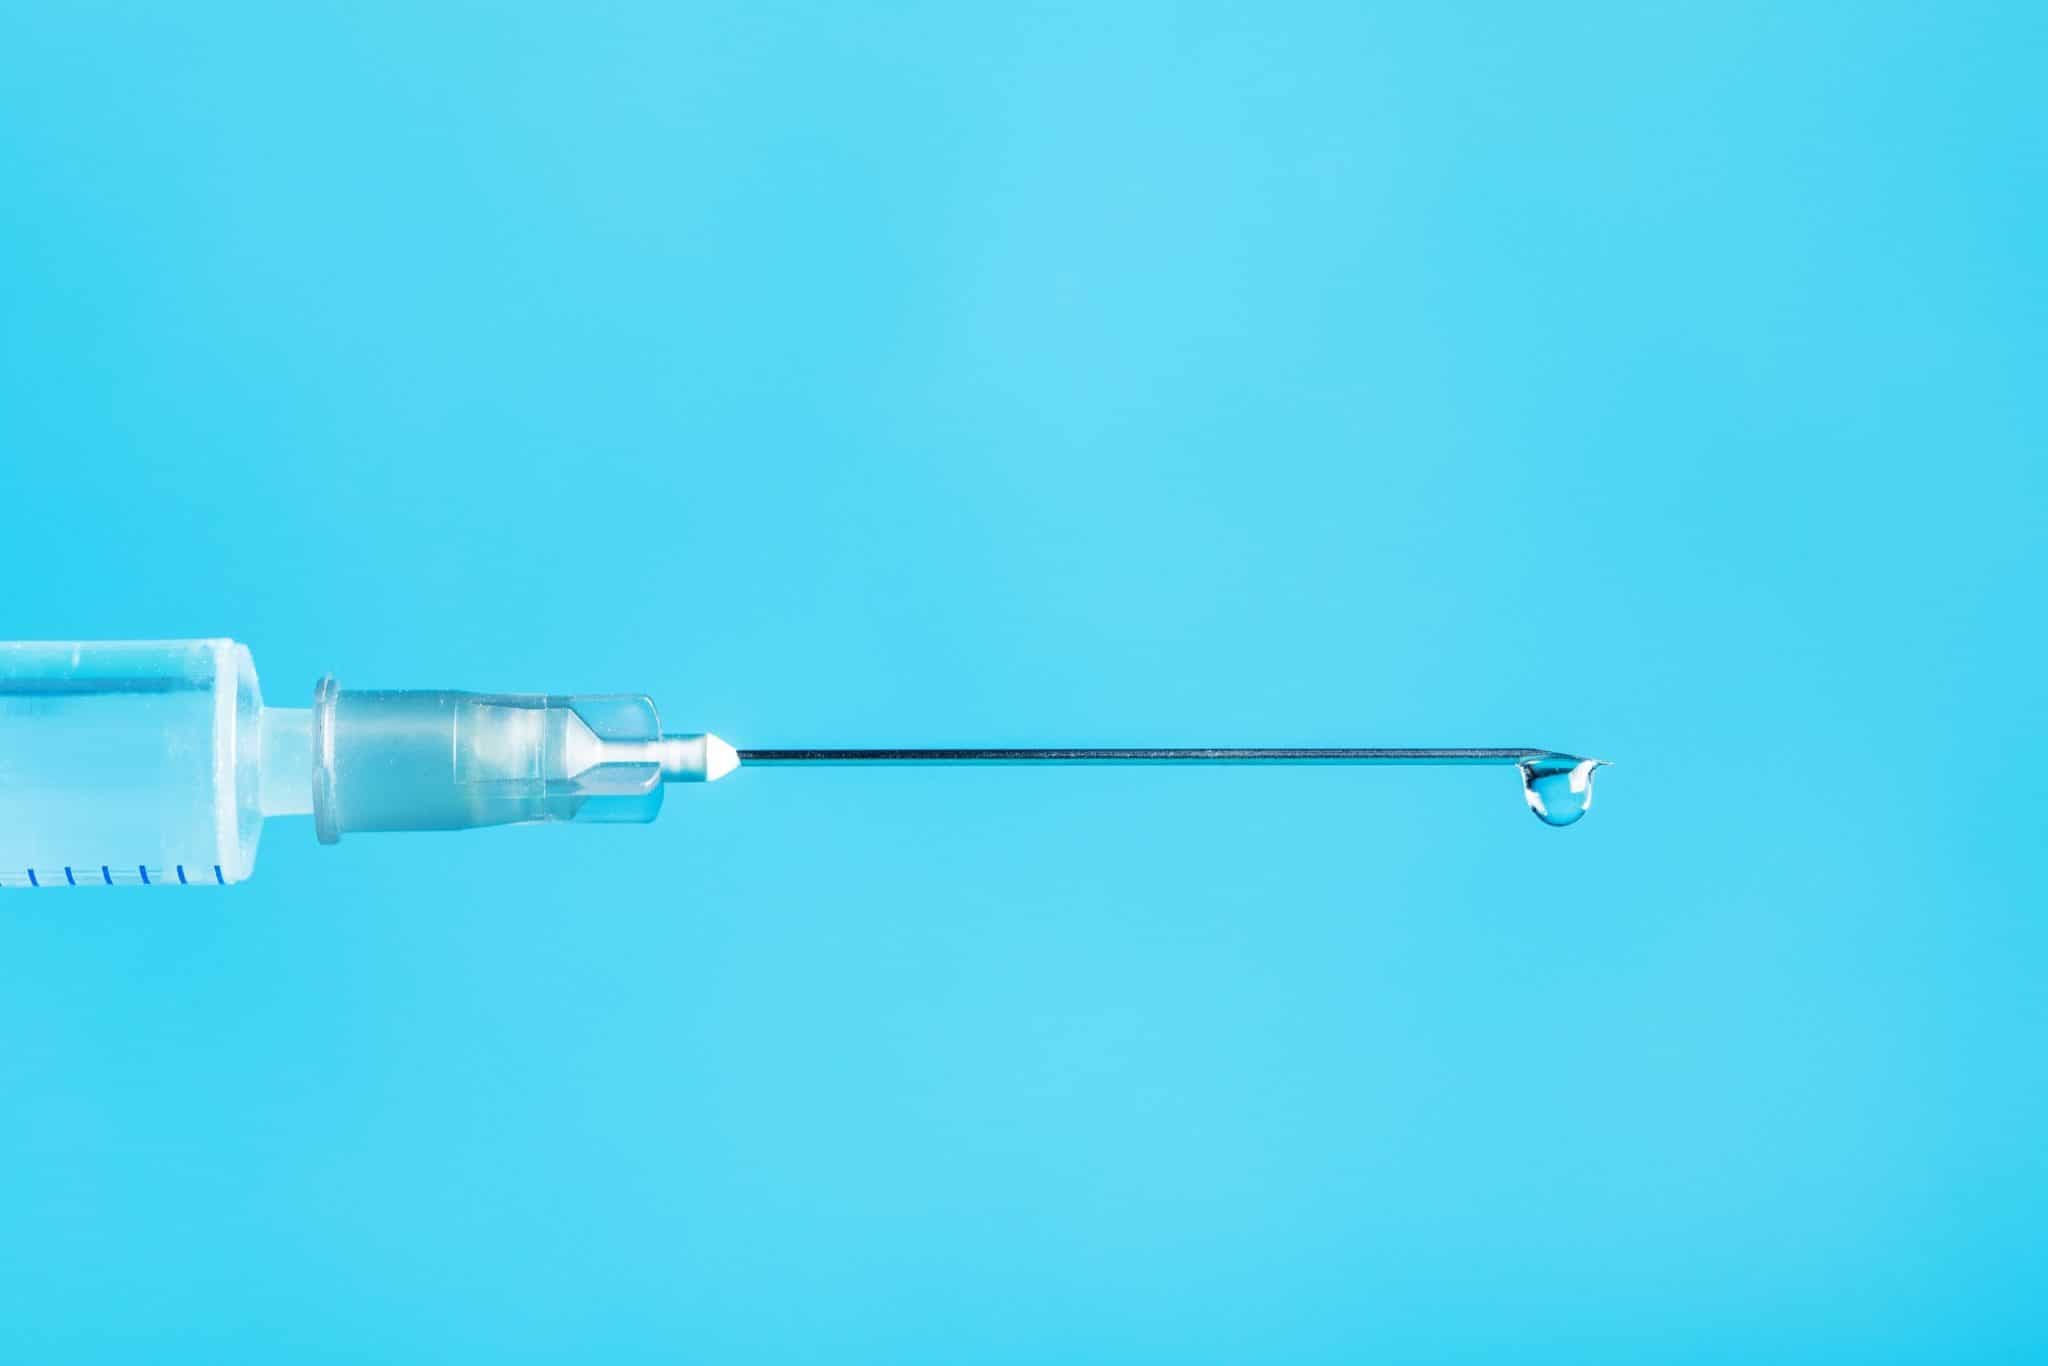 Vitamin B12 injection needle